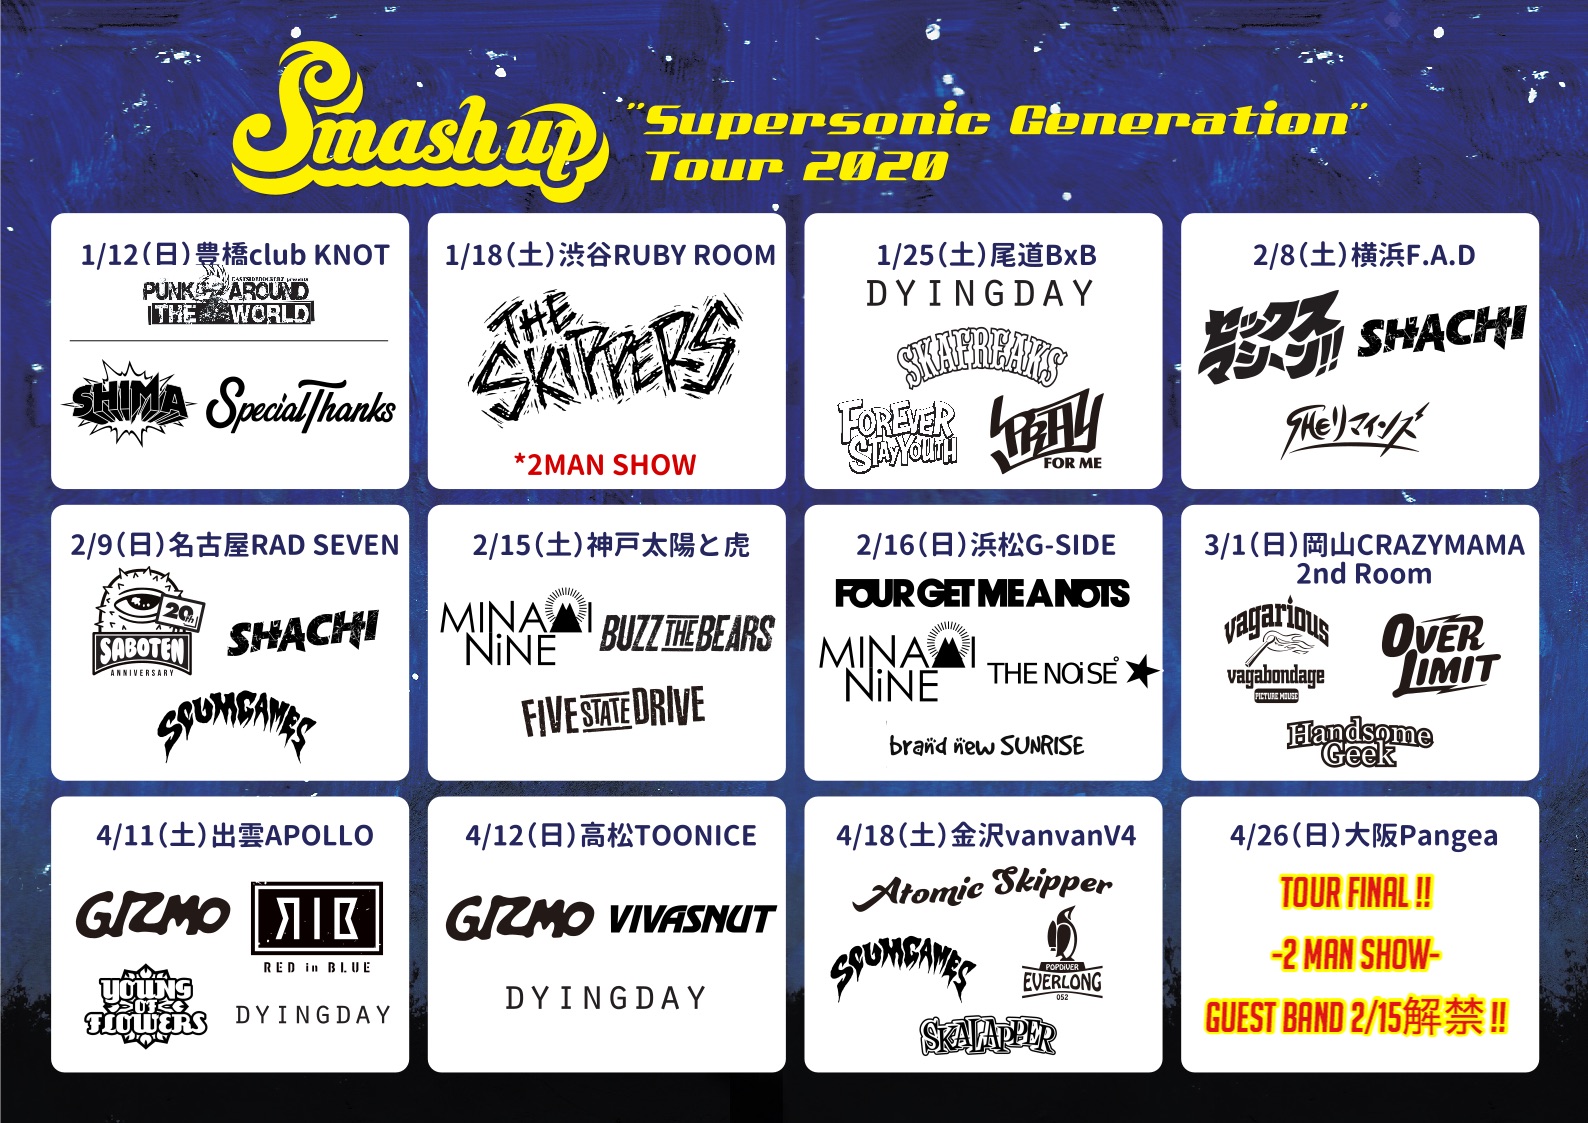 Smash up presents "Supersonic Greneration " Tour 2020